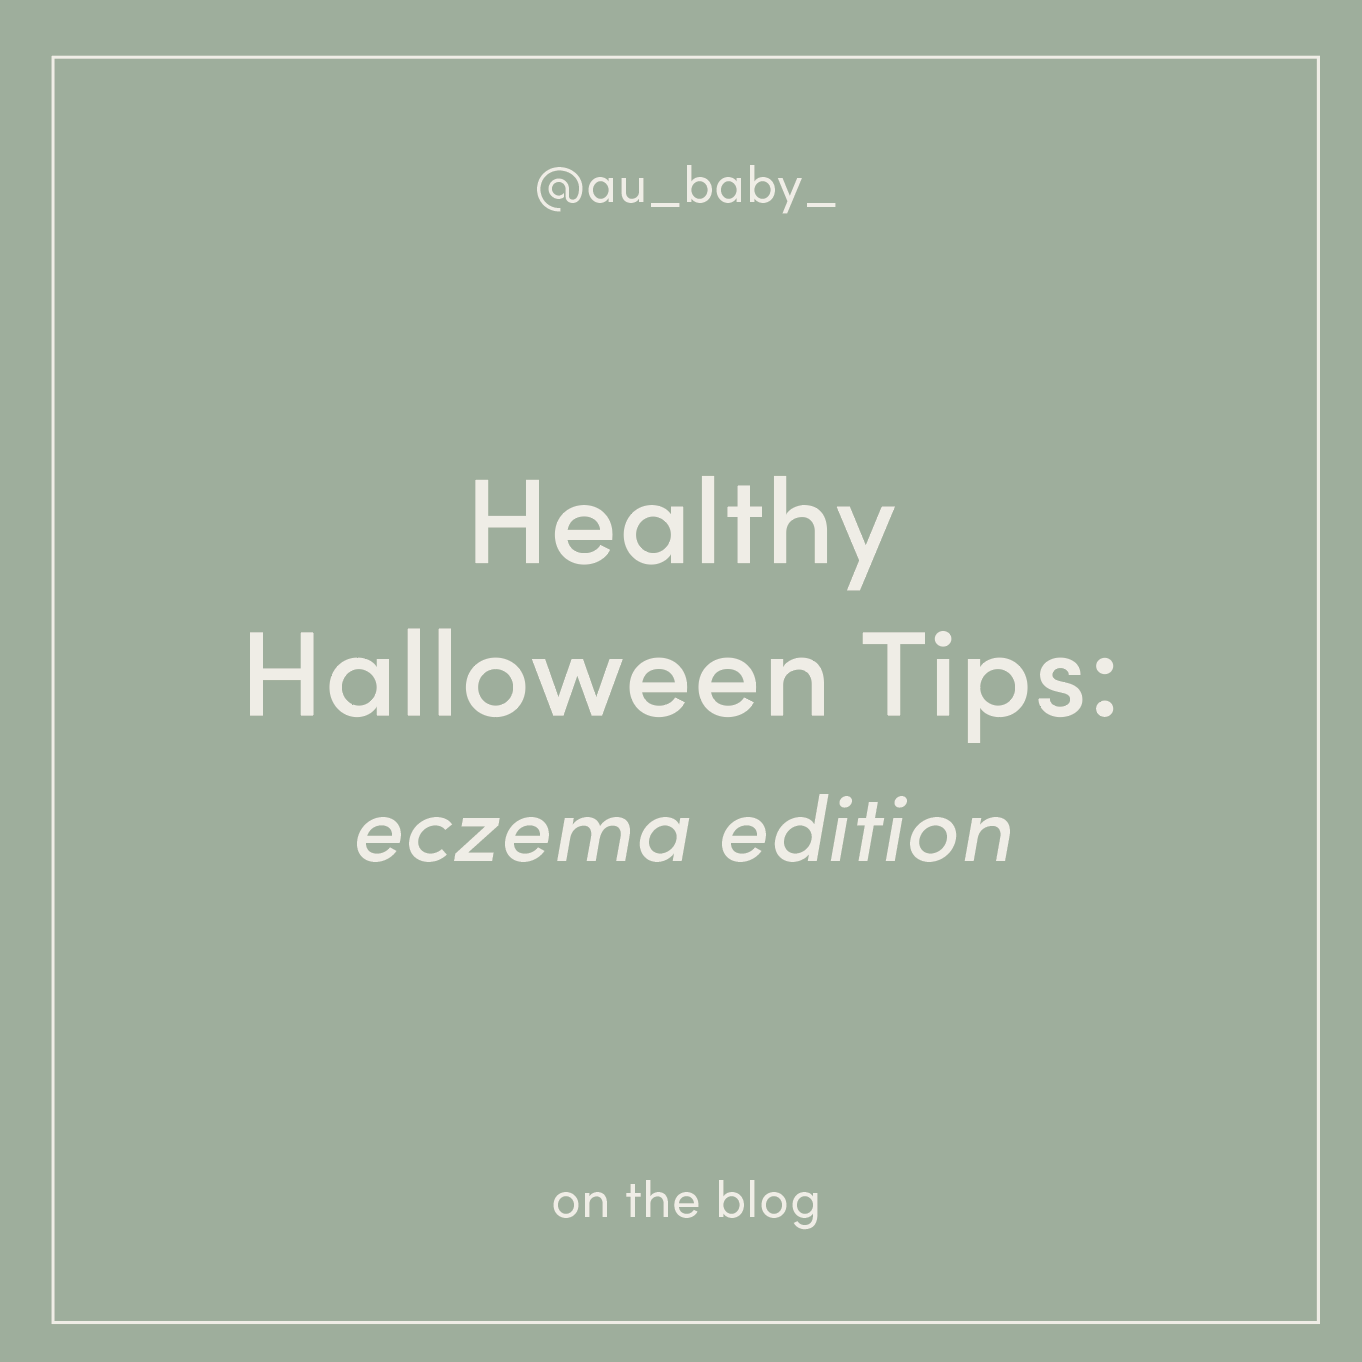 Healthy Halloween Tips for eczema